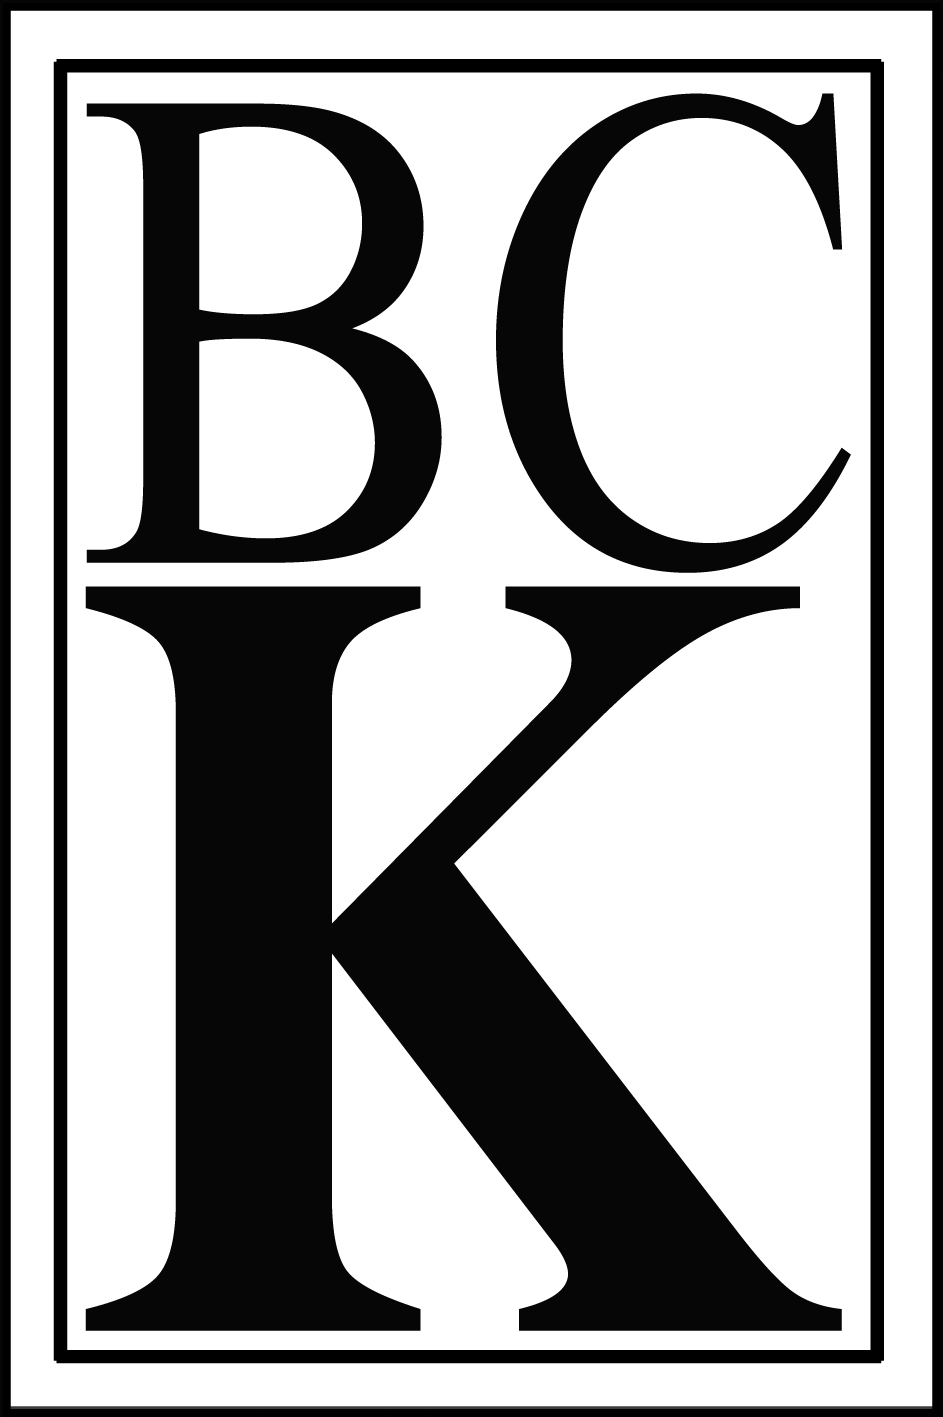 BCK (Kosher Check)